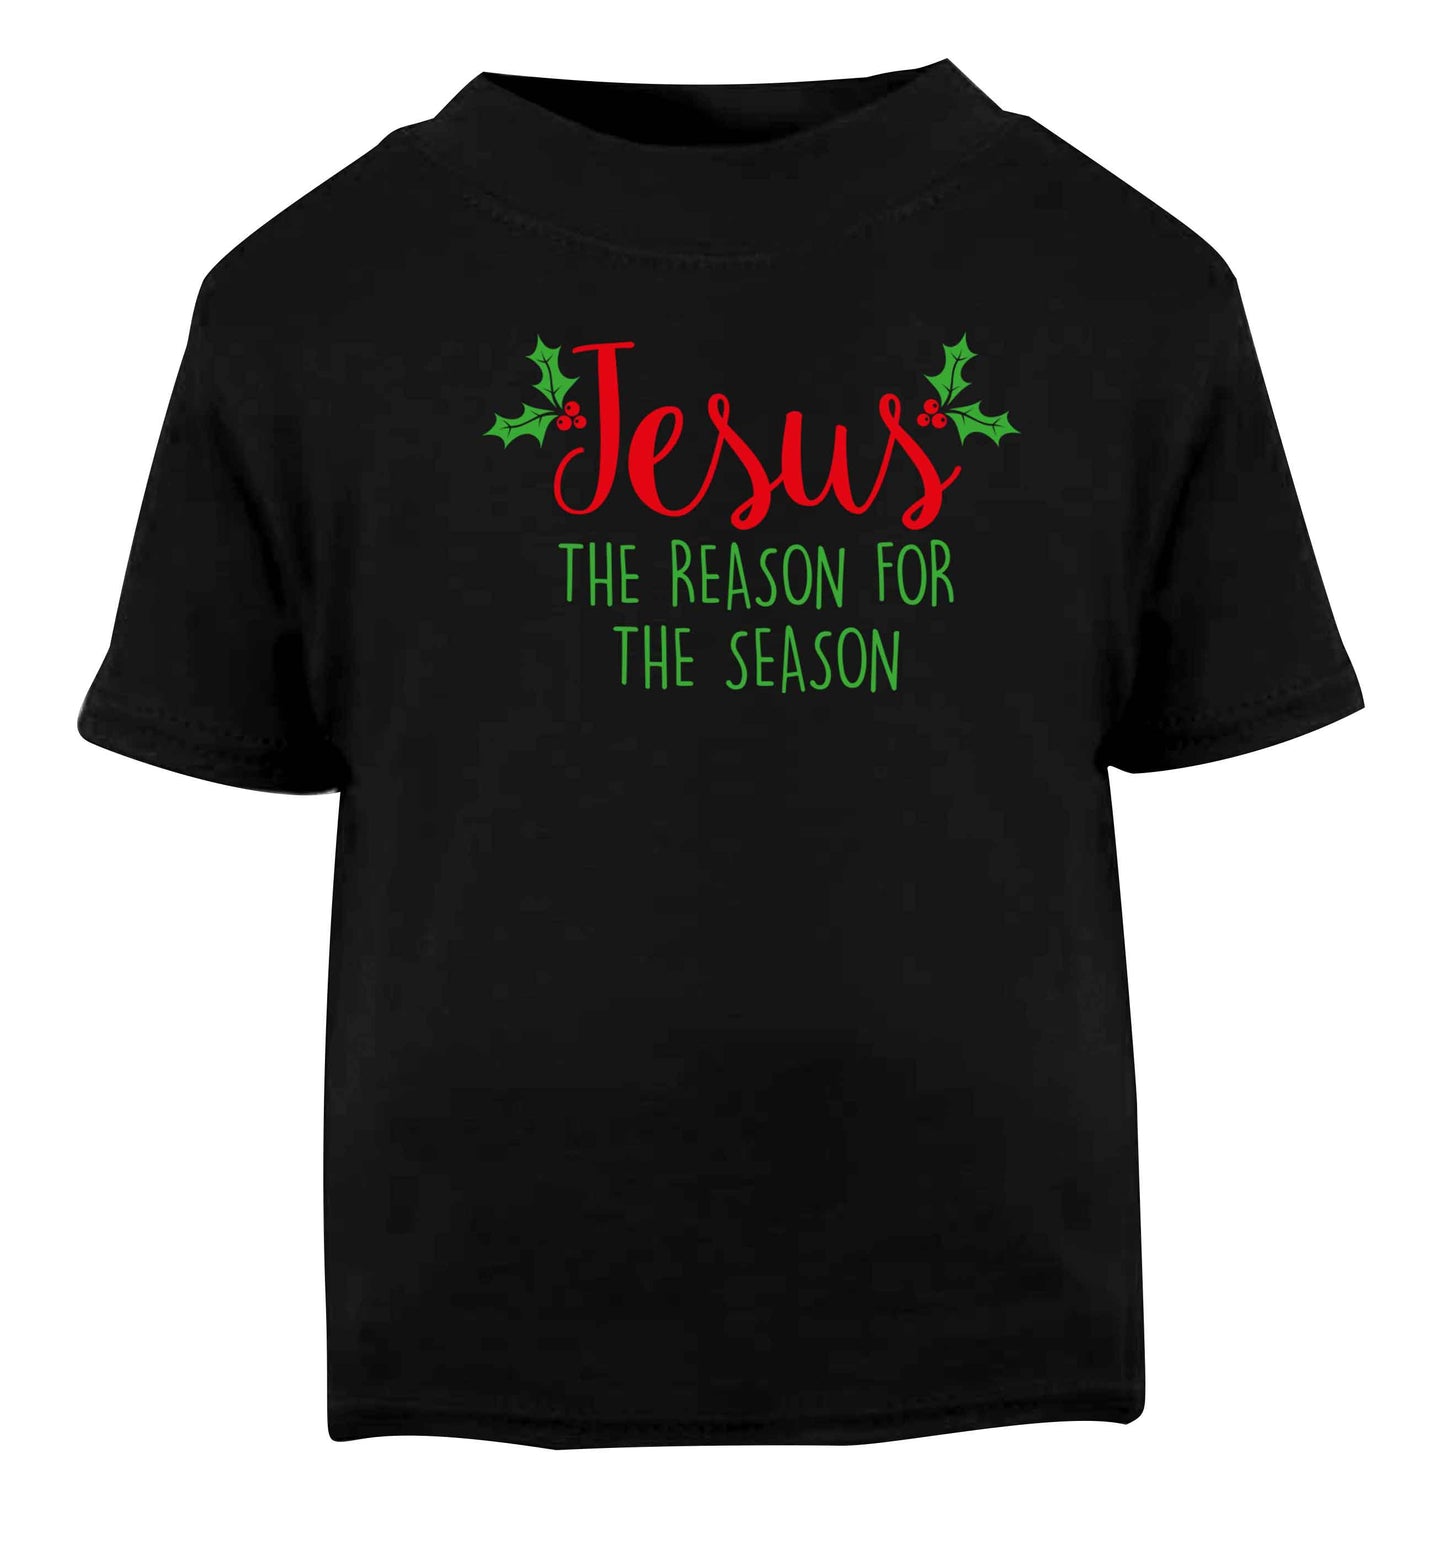 Jesus the reason for the season Black baby toddler Tshirt 2 years